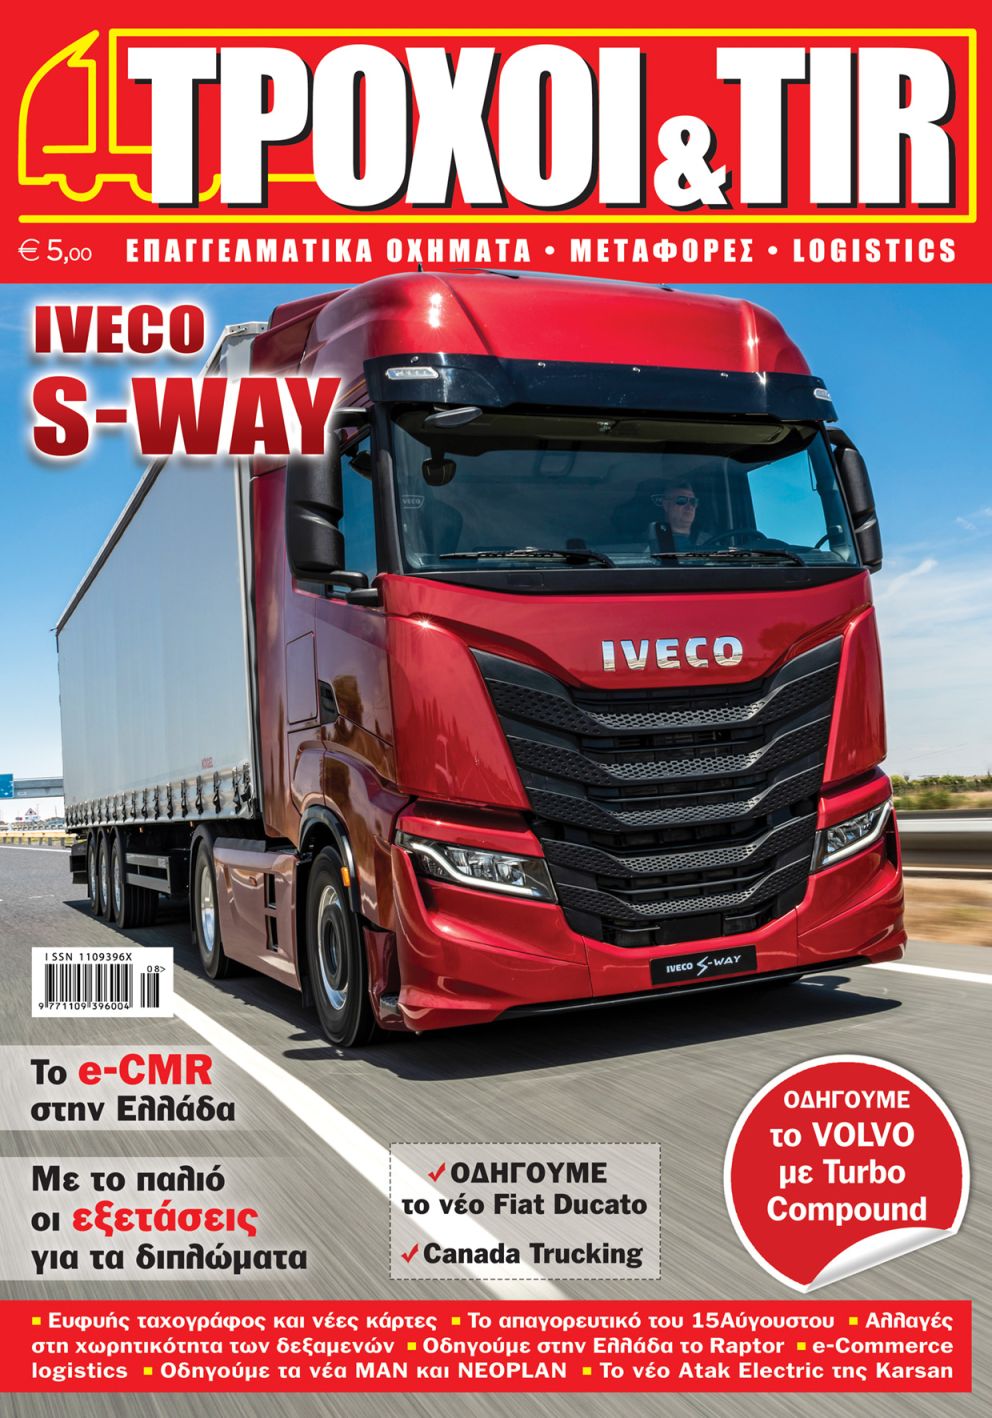 Troxoikaitir issue 376 august 2019 cover